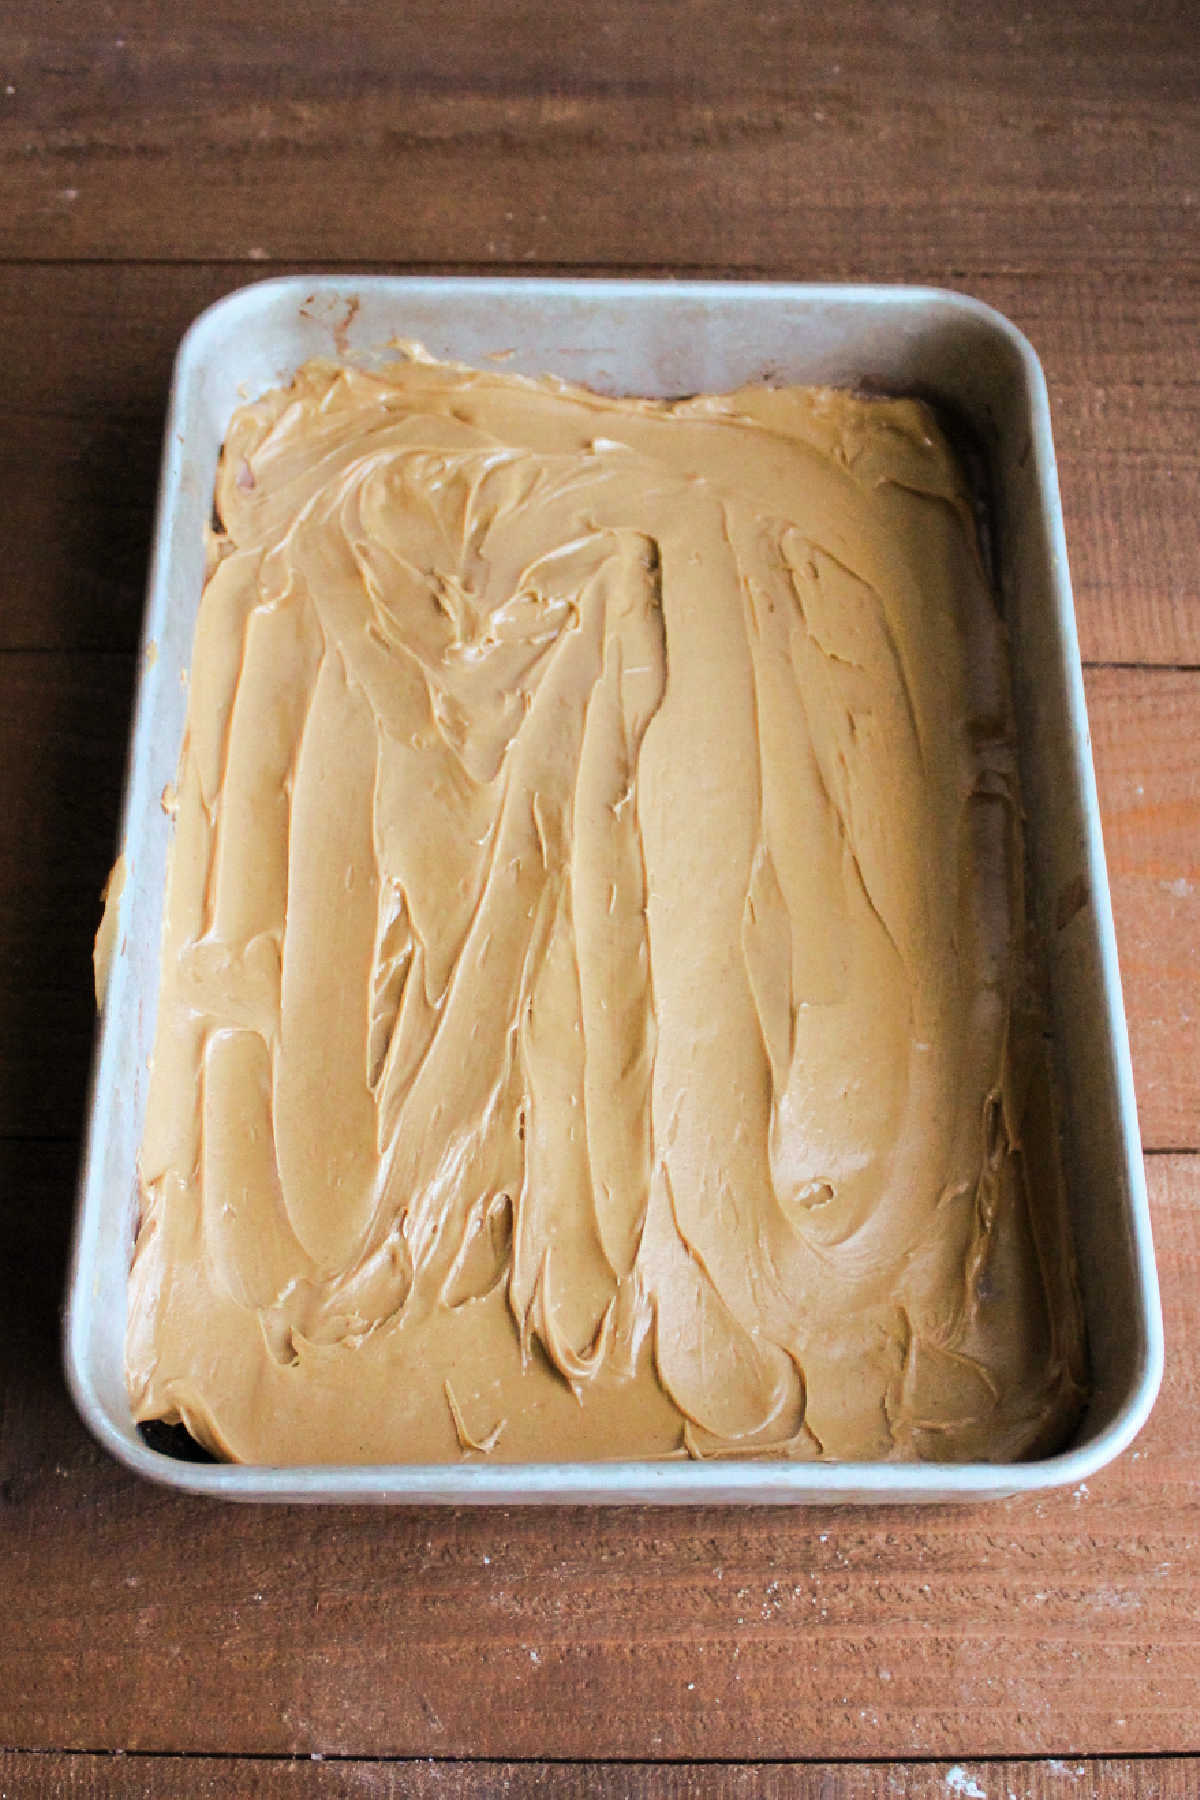 Creamy peanut butter spread over chocolate ice cream in cake pan.